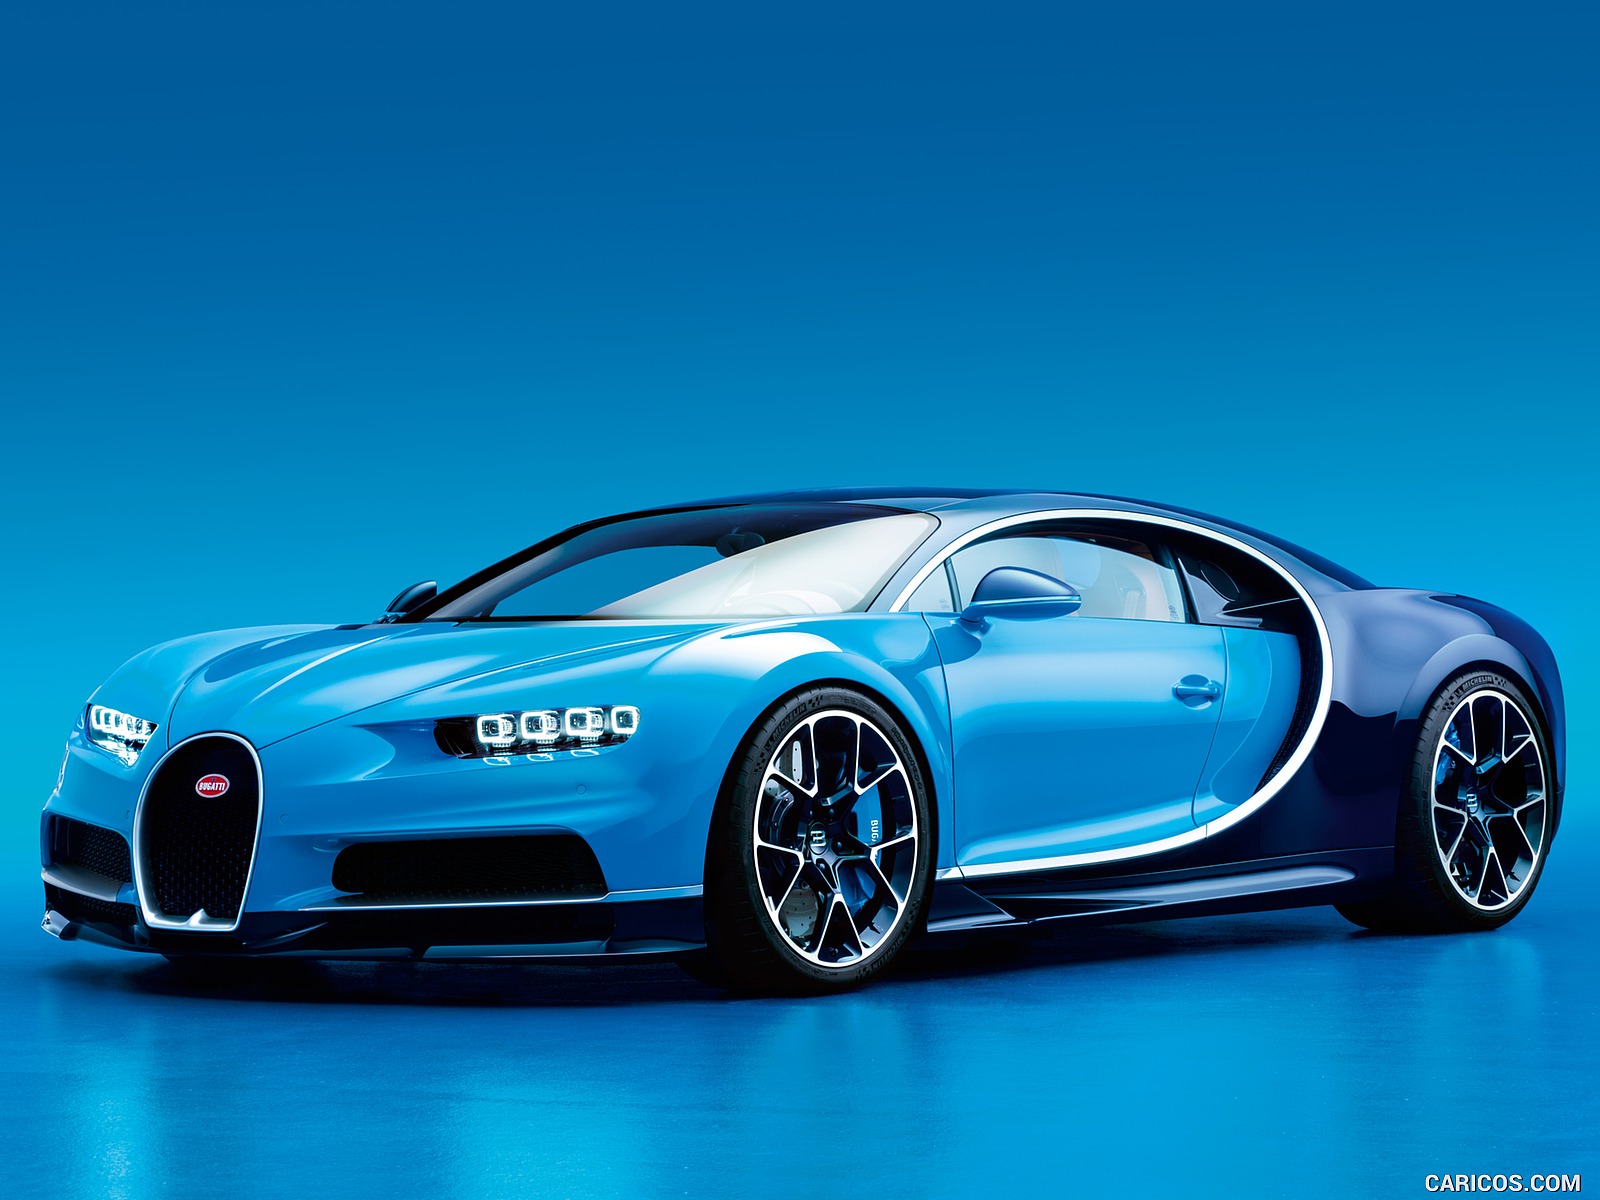 Bugatti Model 100 Wallpapers